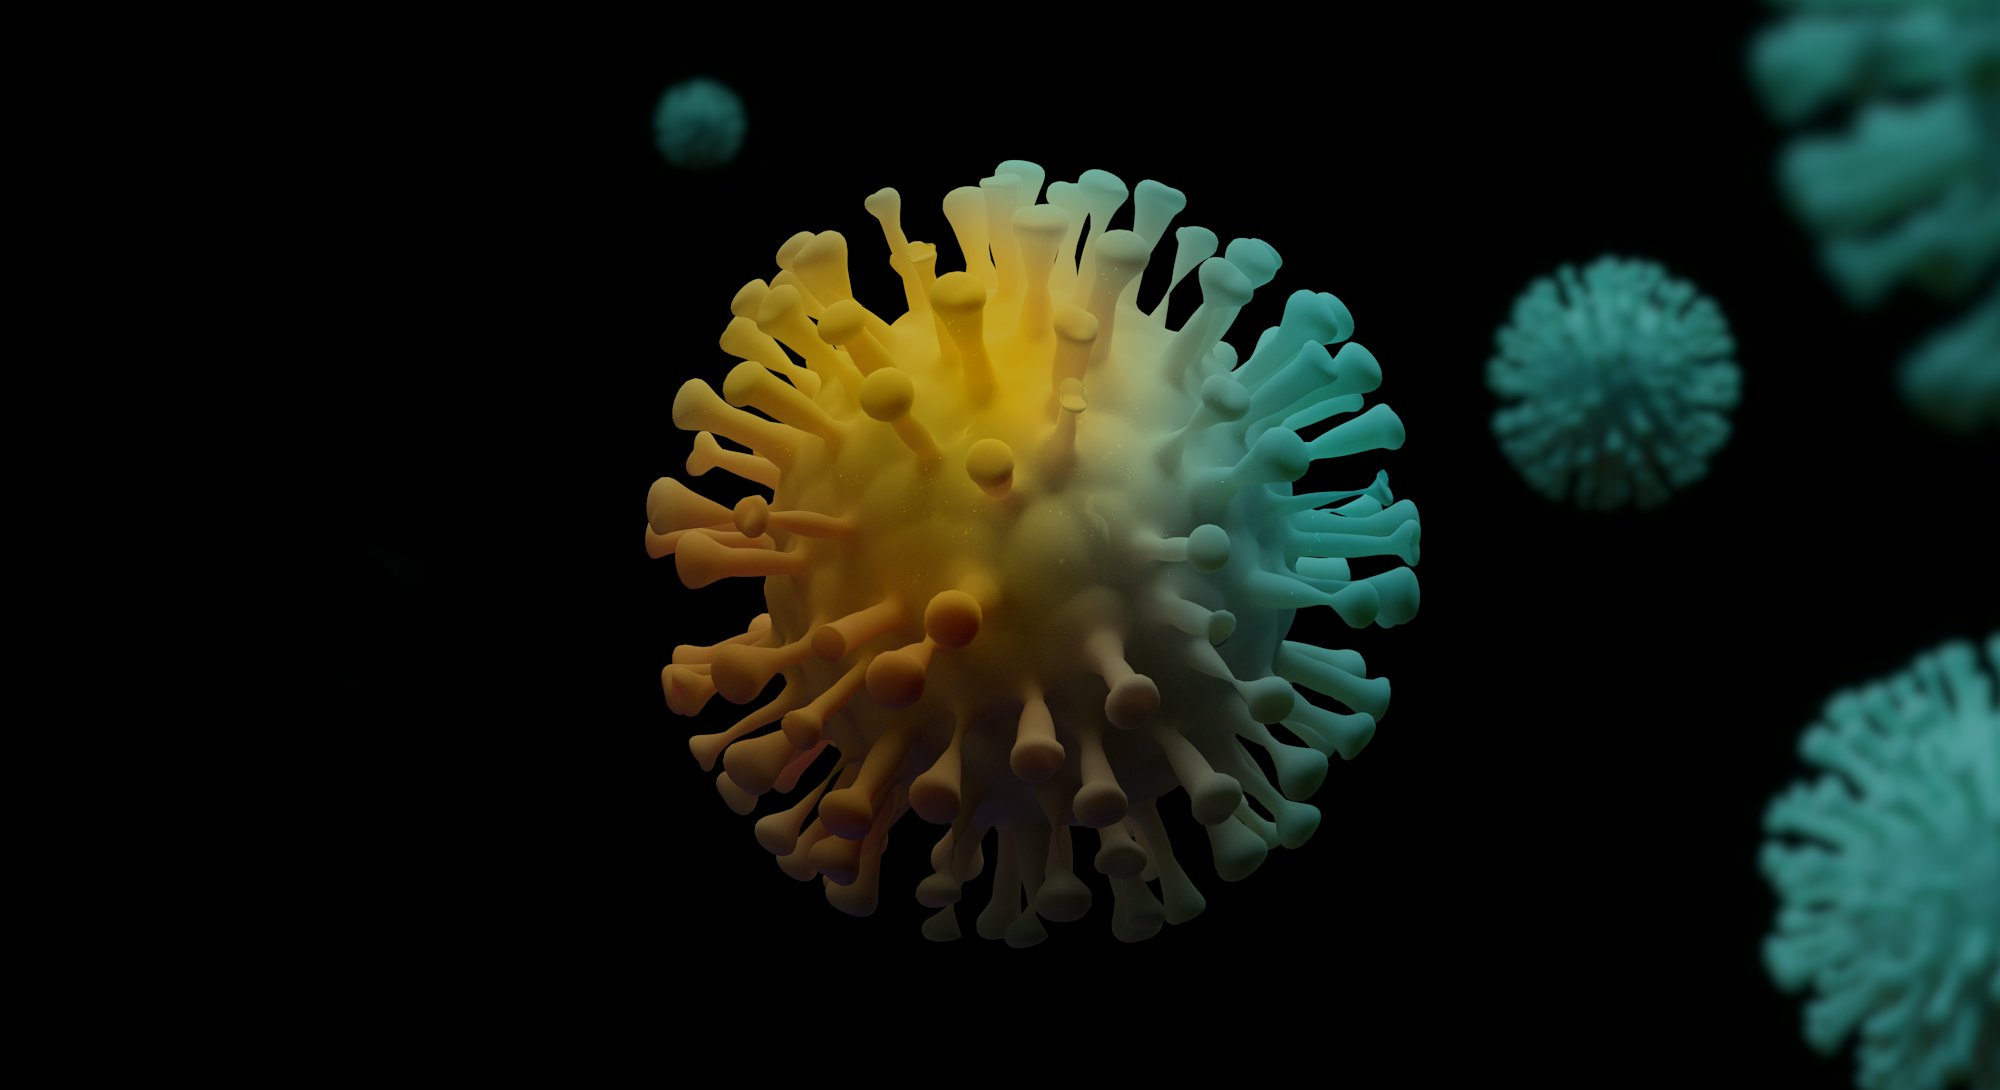 Coronavirus 3d rendering. Illustration showing structure of epidemic virus